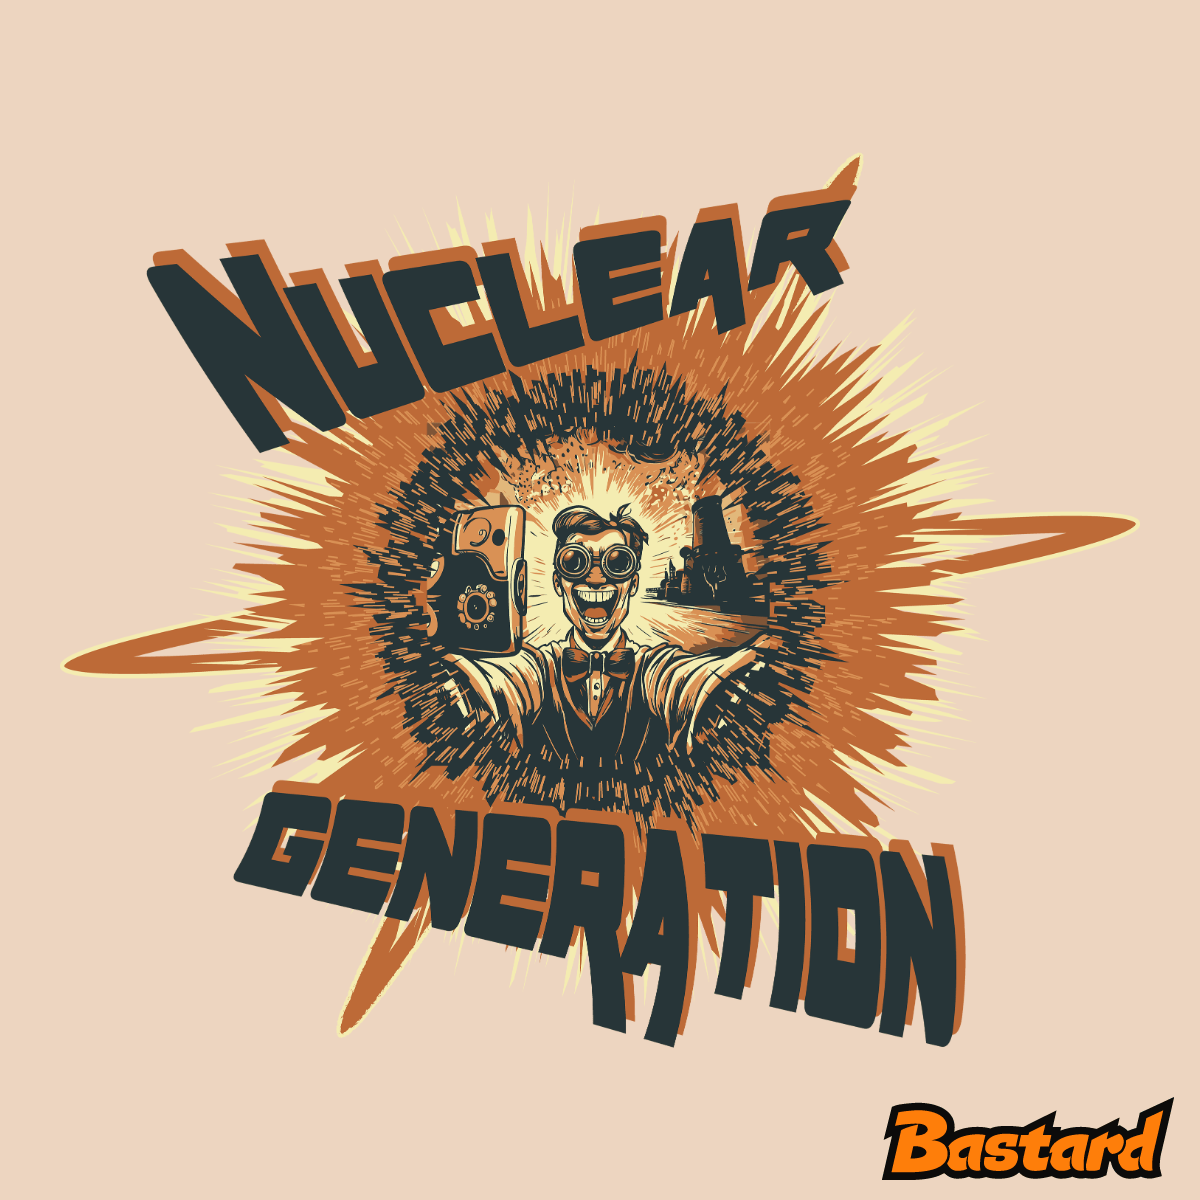 Nuclear generation 2